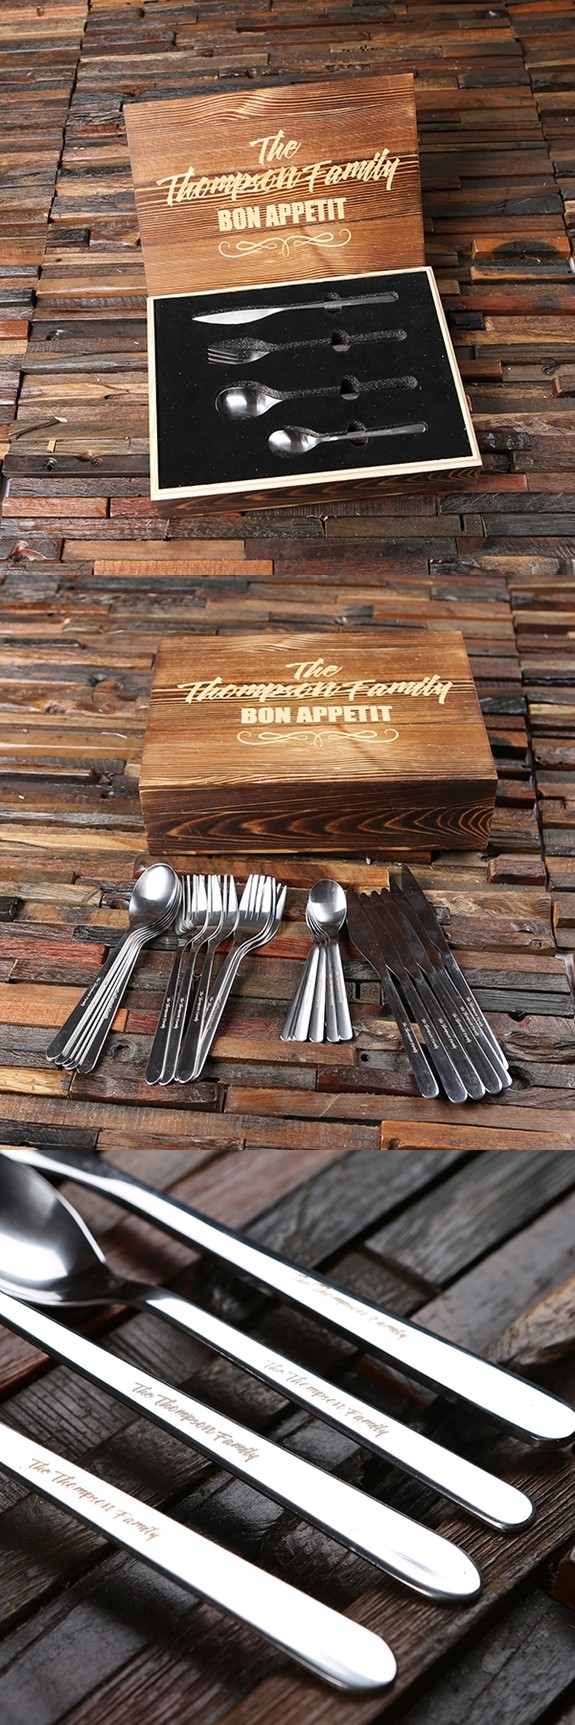 Personalized 24 pc Stainless-Steel Cutlery Set in Keepsake Wooden Box